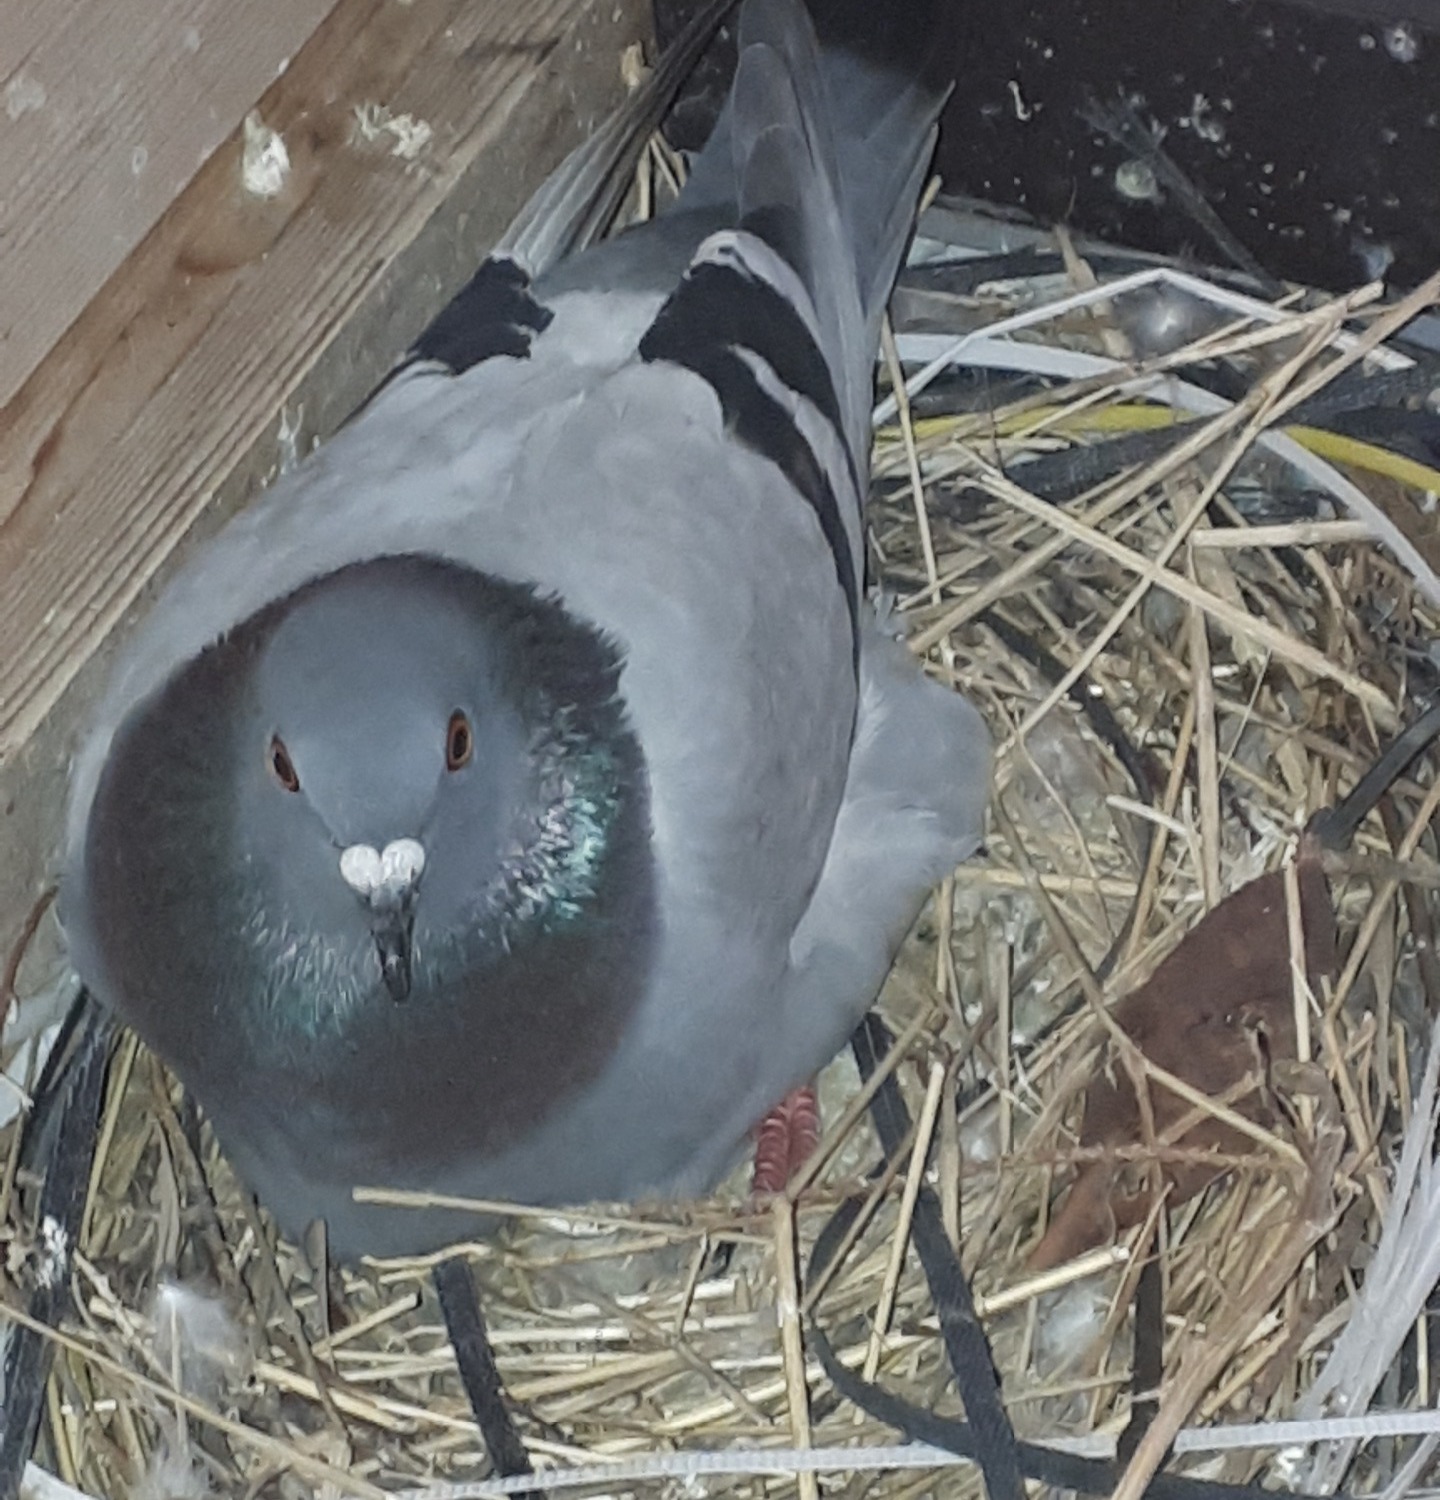 Nesting pigeon